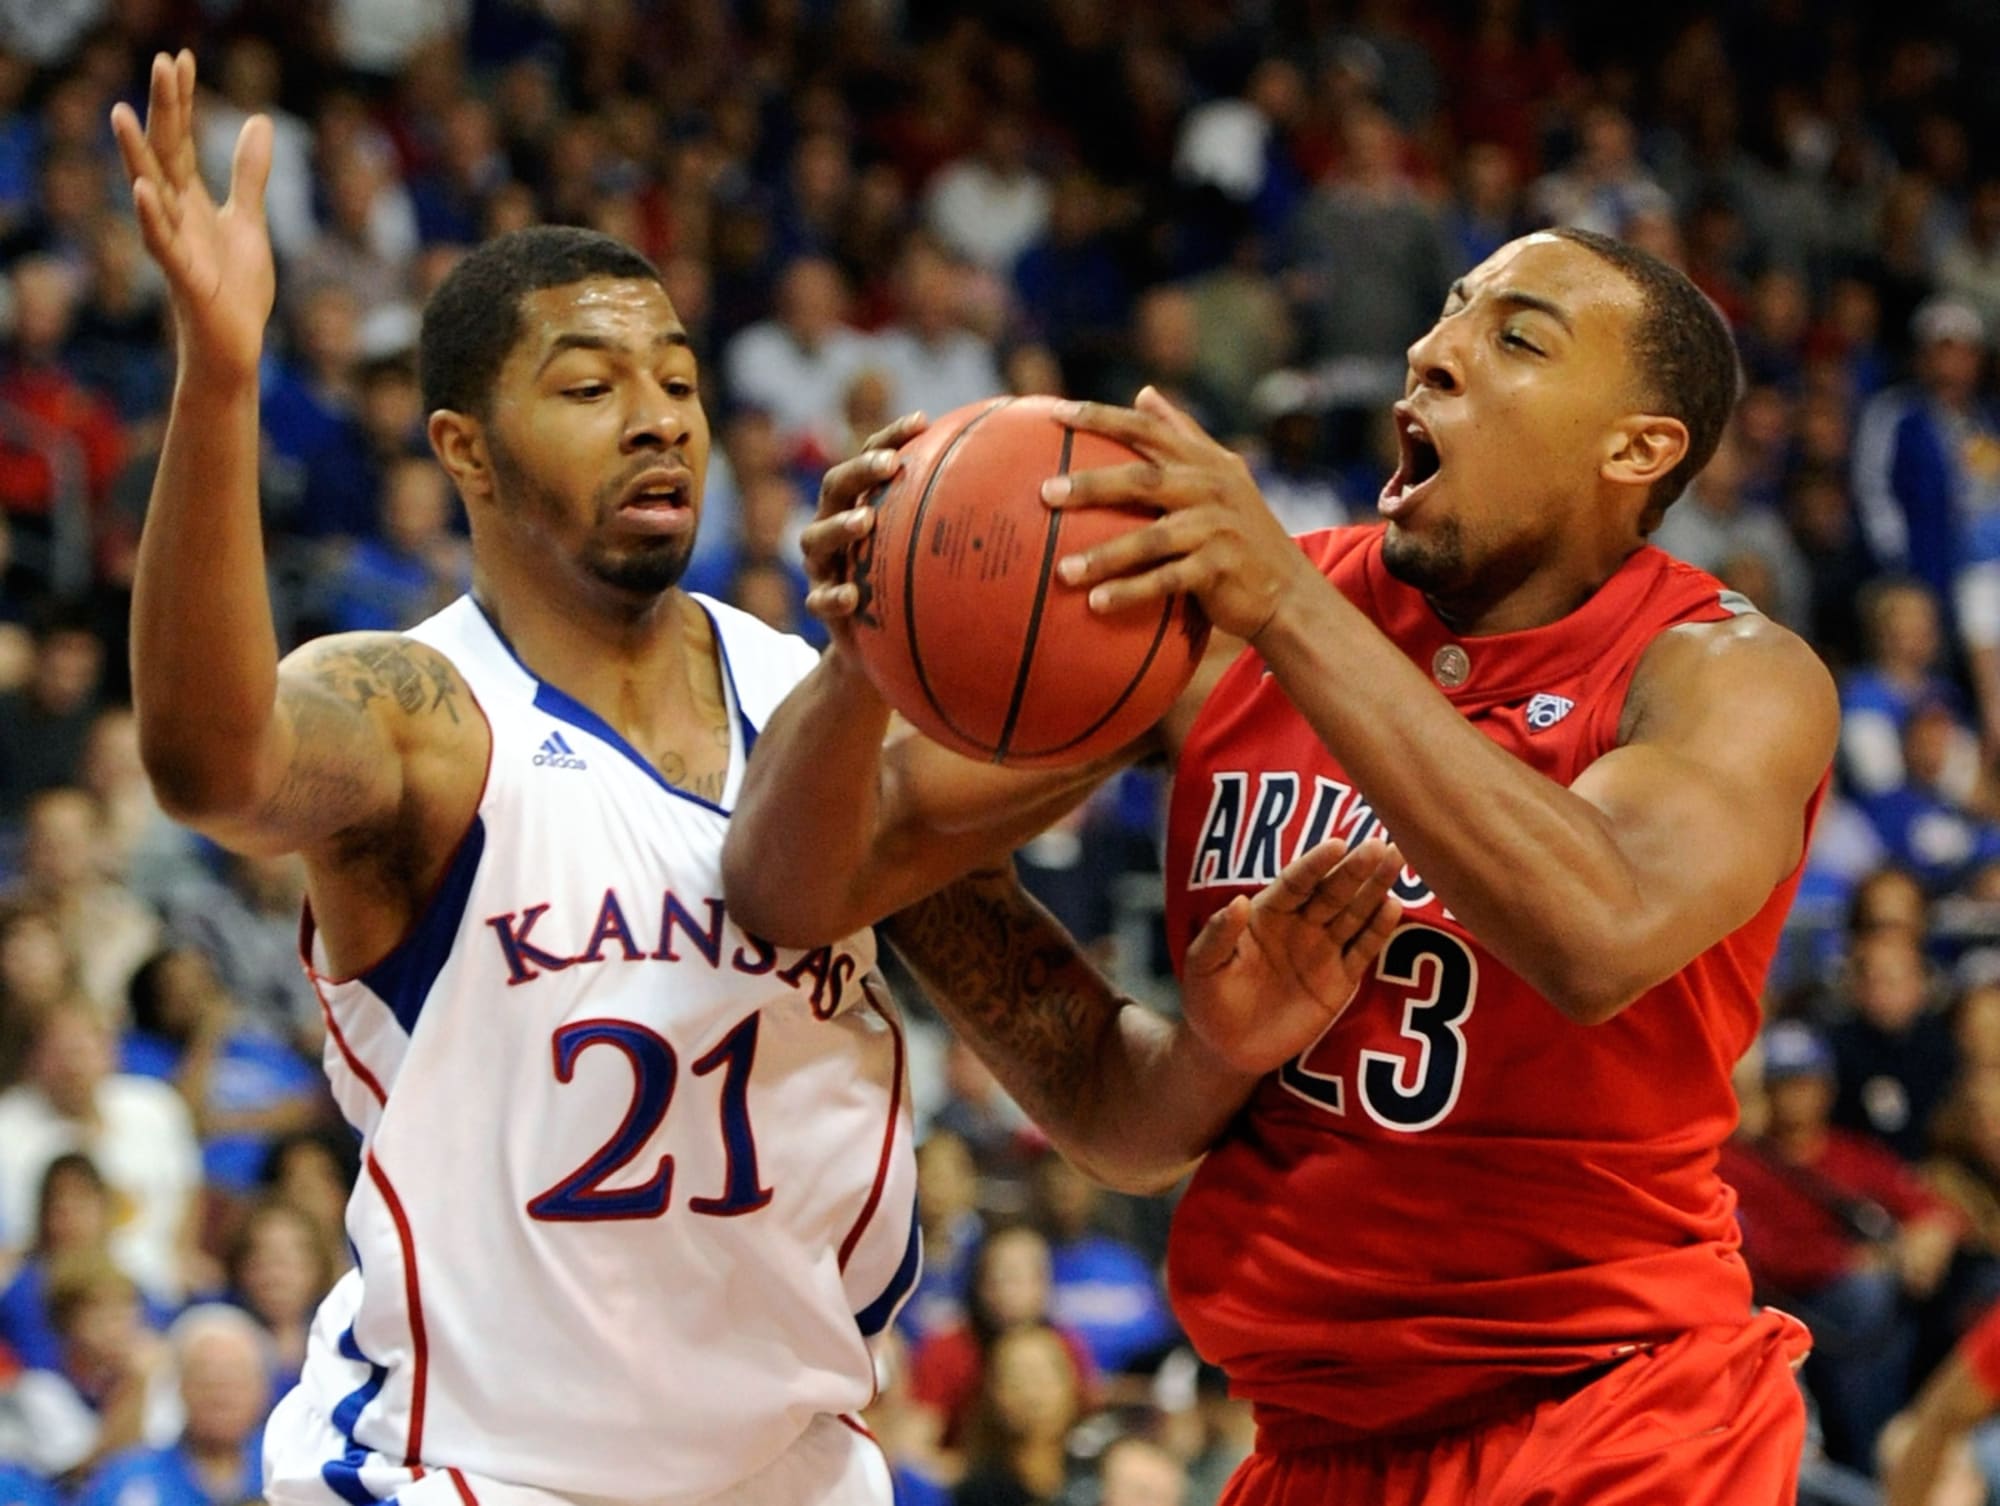 Analyst says Kansas basketball vs